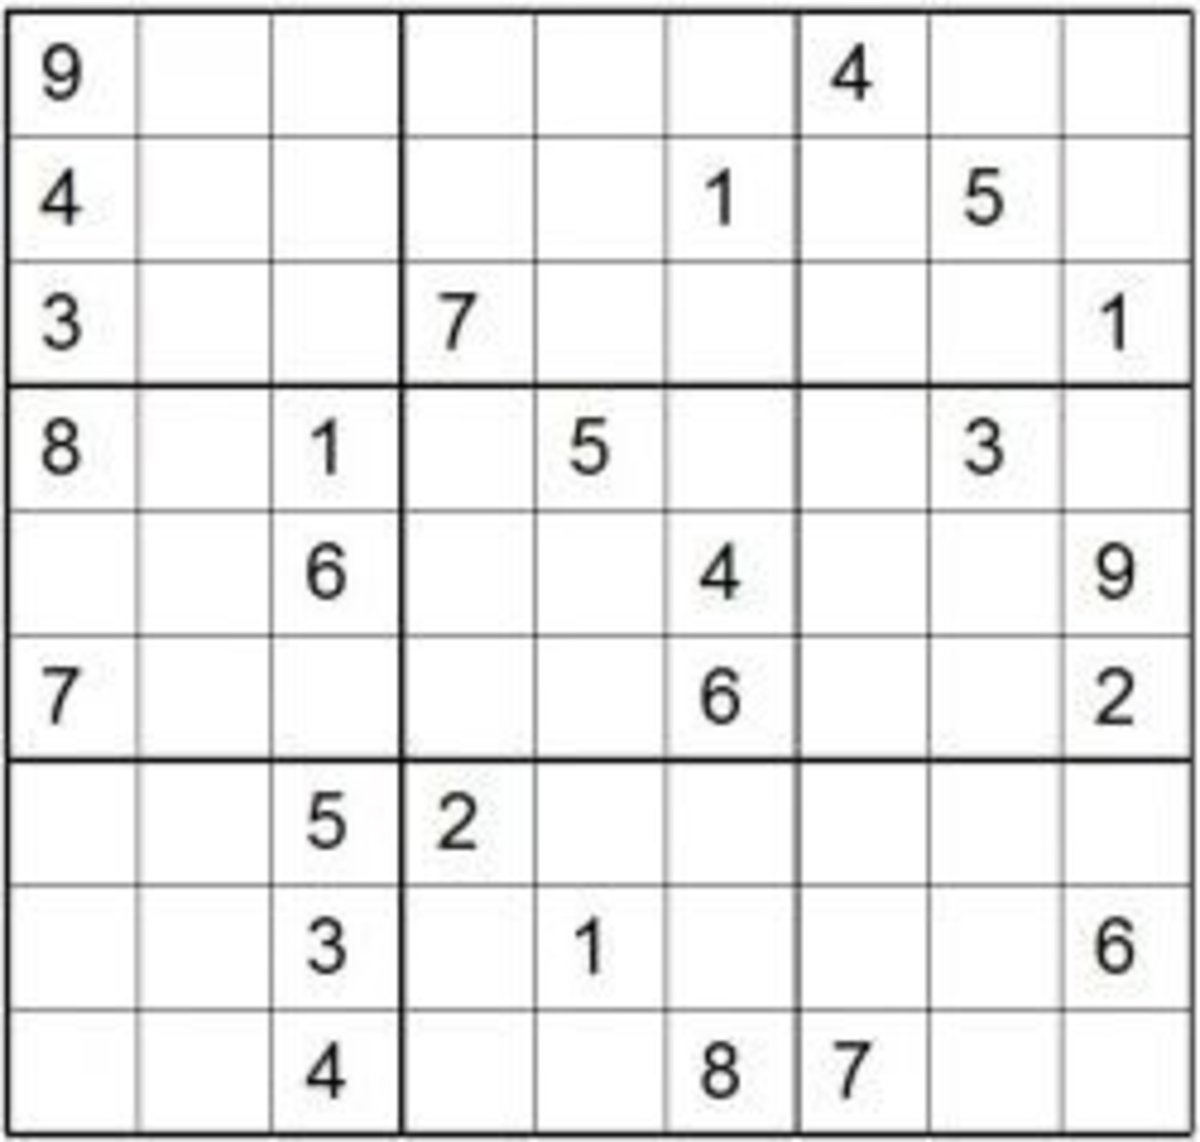 print-sudoku-puzzles-hubpages